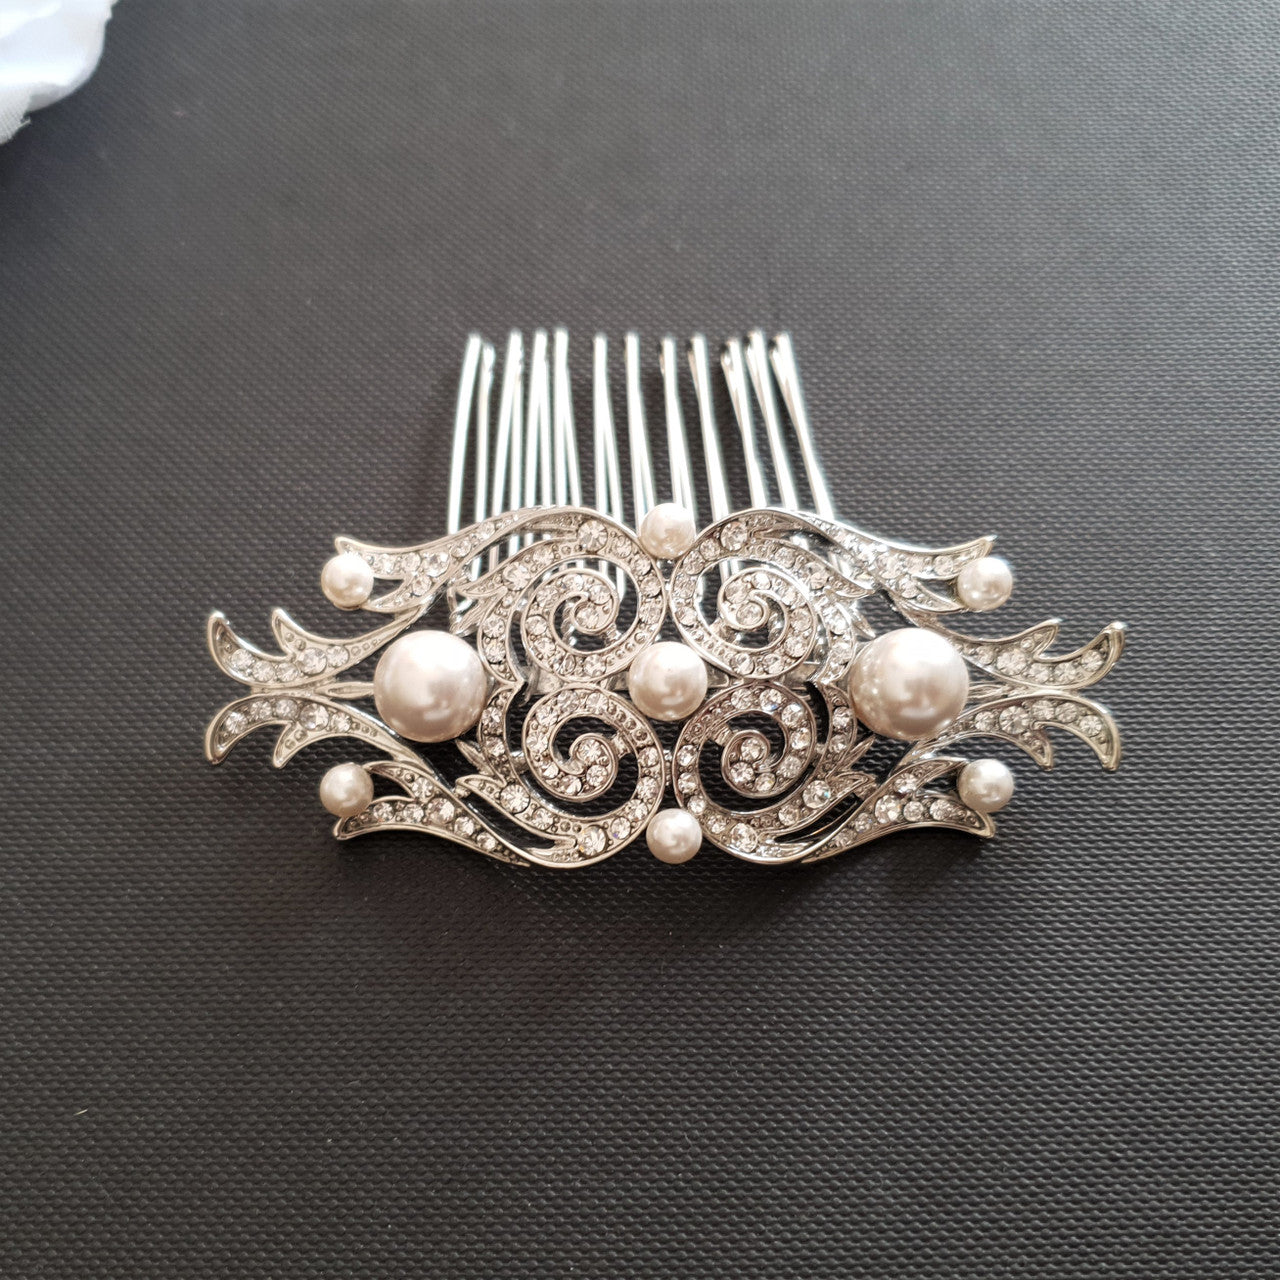 Vintage Inspired Bridal Hair Comb-Aurora